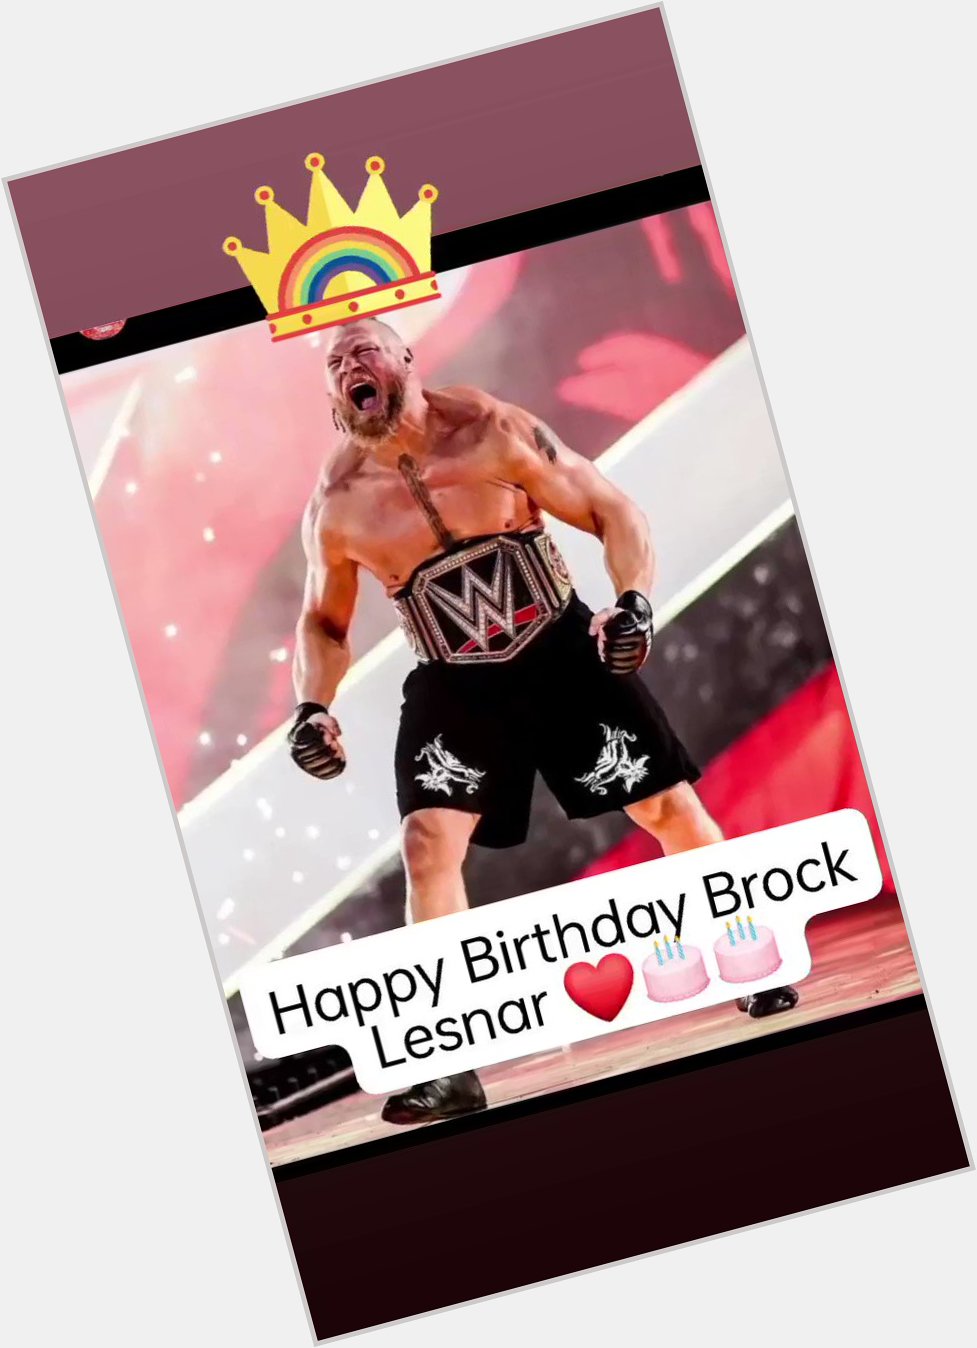 Happy Birthday Brock Lesnar     